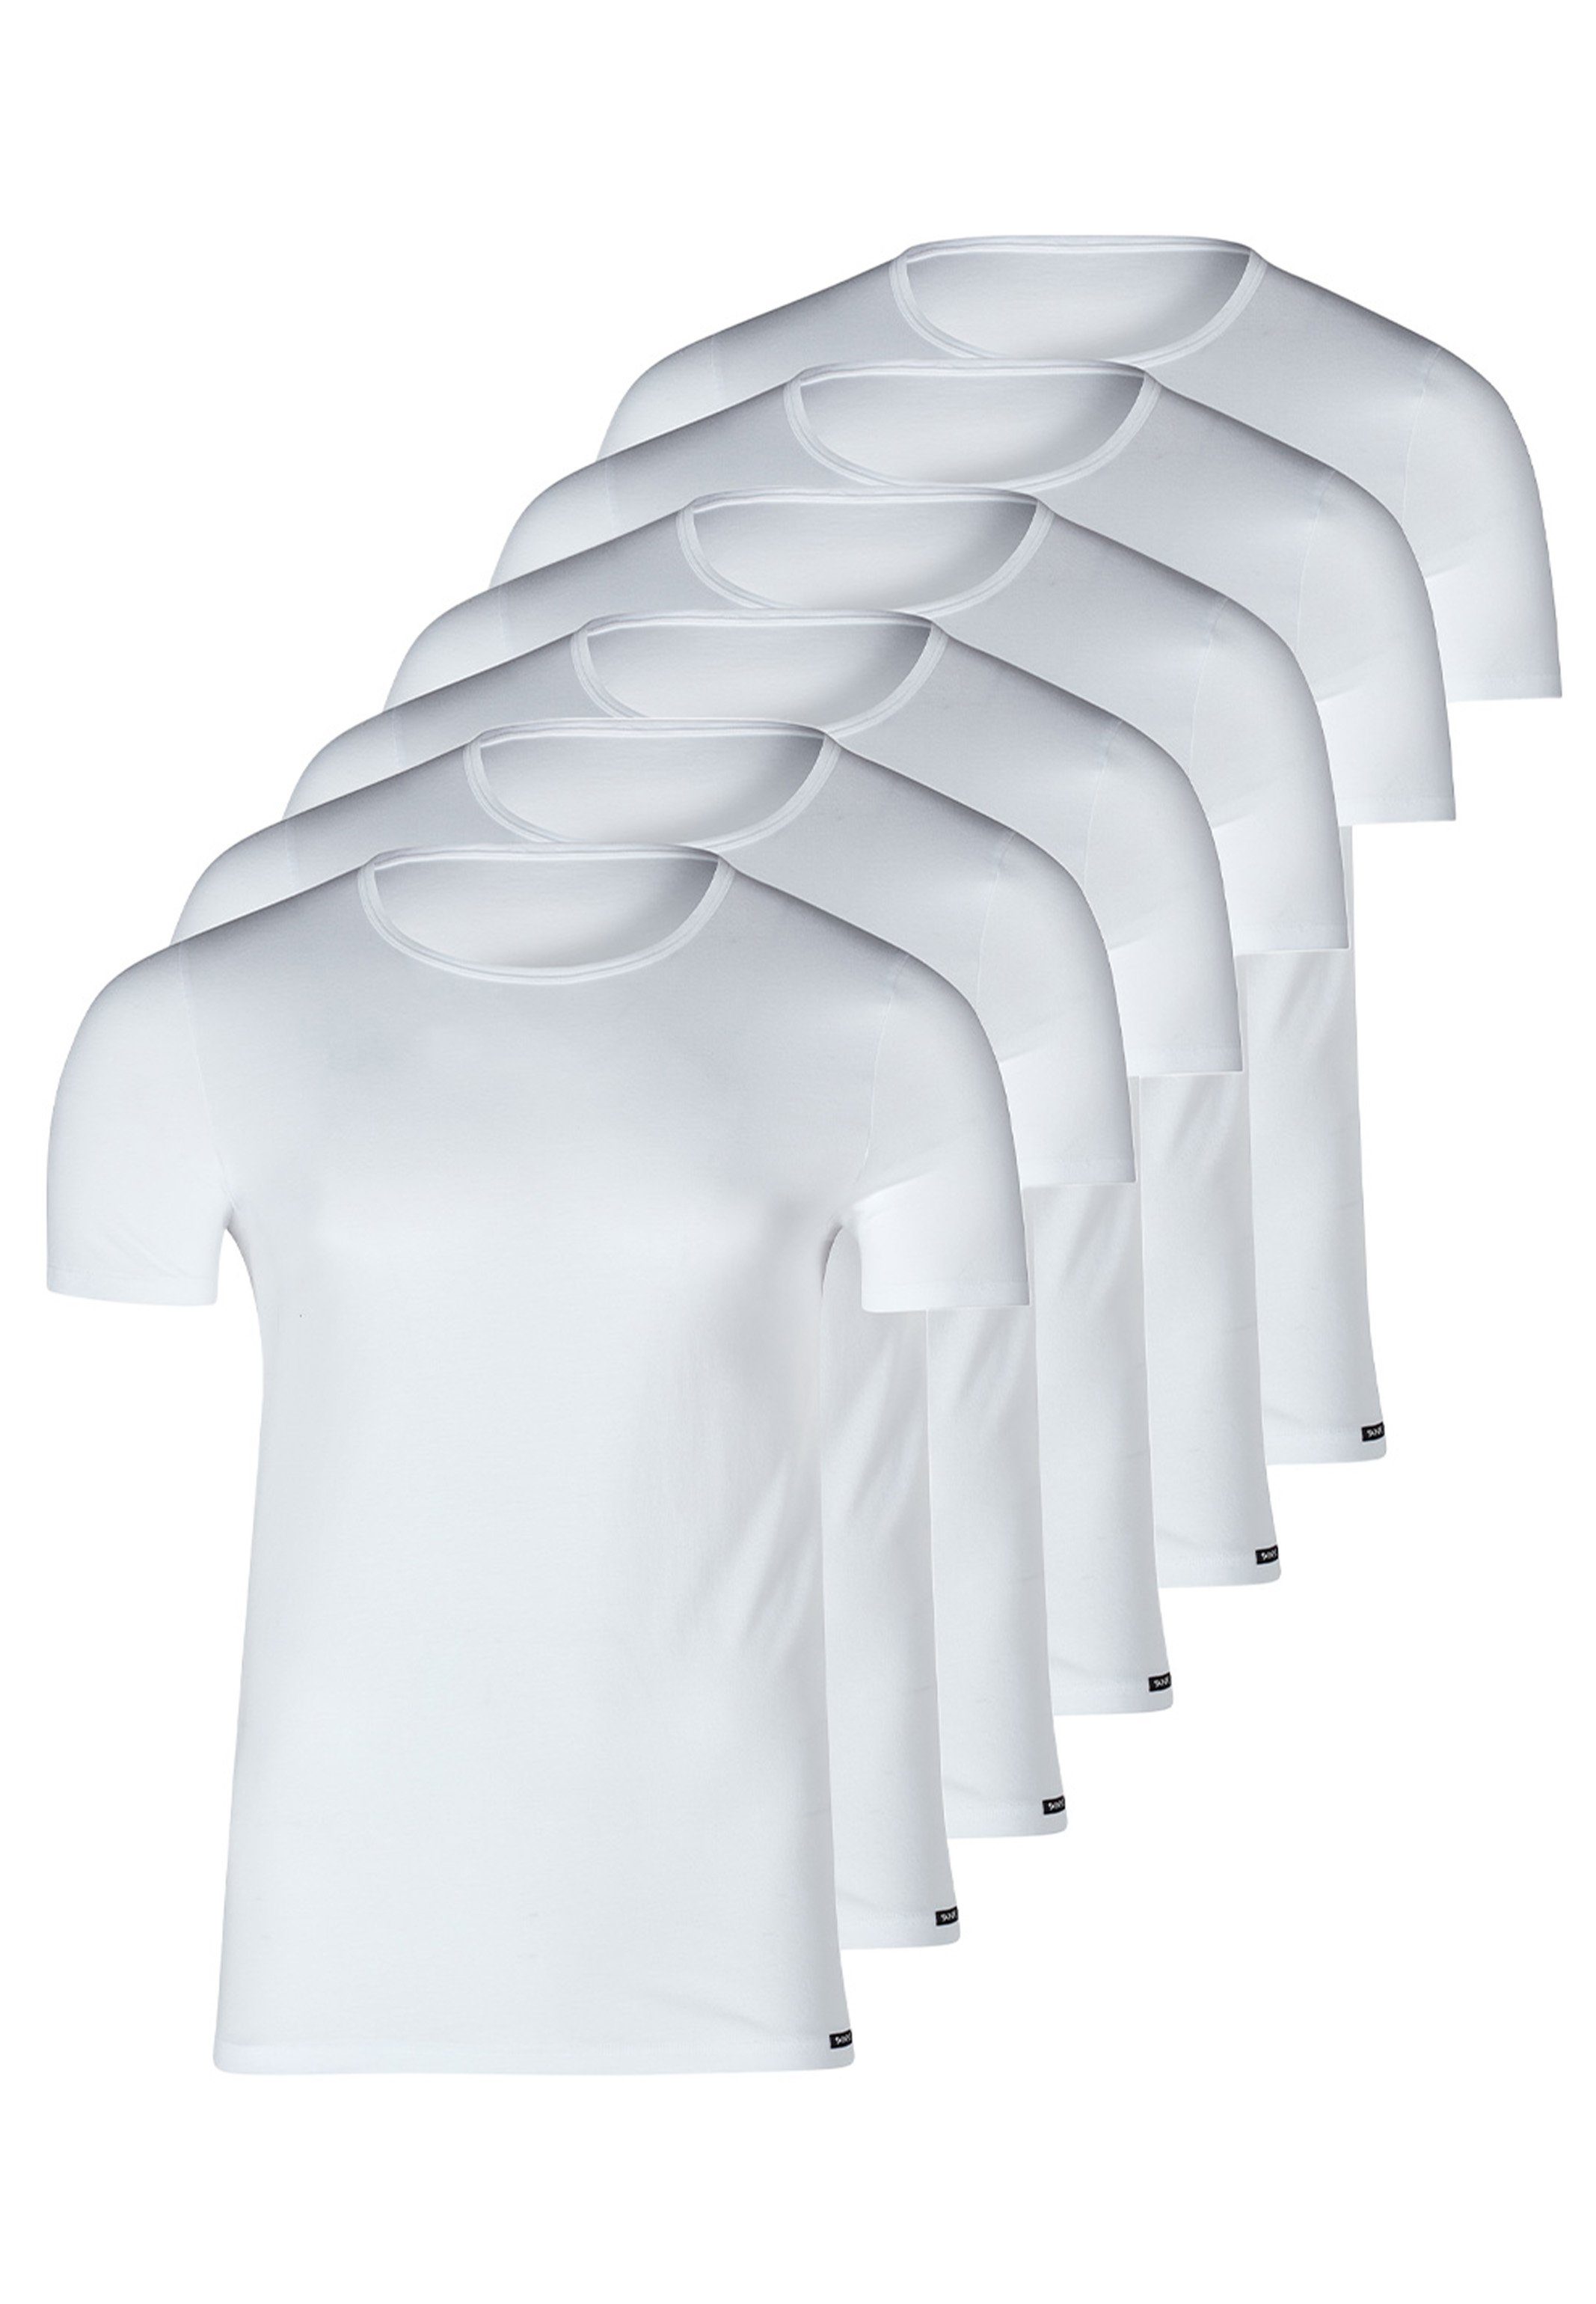 Skiny Unterhemd 6er Pack Unterhemd / Shirt Kurzarm (Spar-Set, 6-St) Unterhemd / Shirt Kurzarm - Baumwolle - T-Shirt mit Rundhalsausschnitt